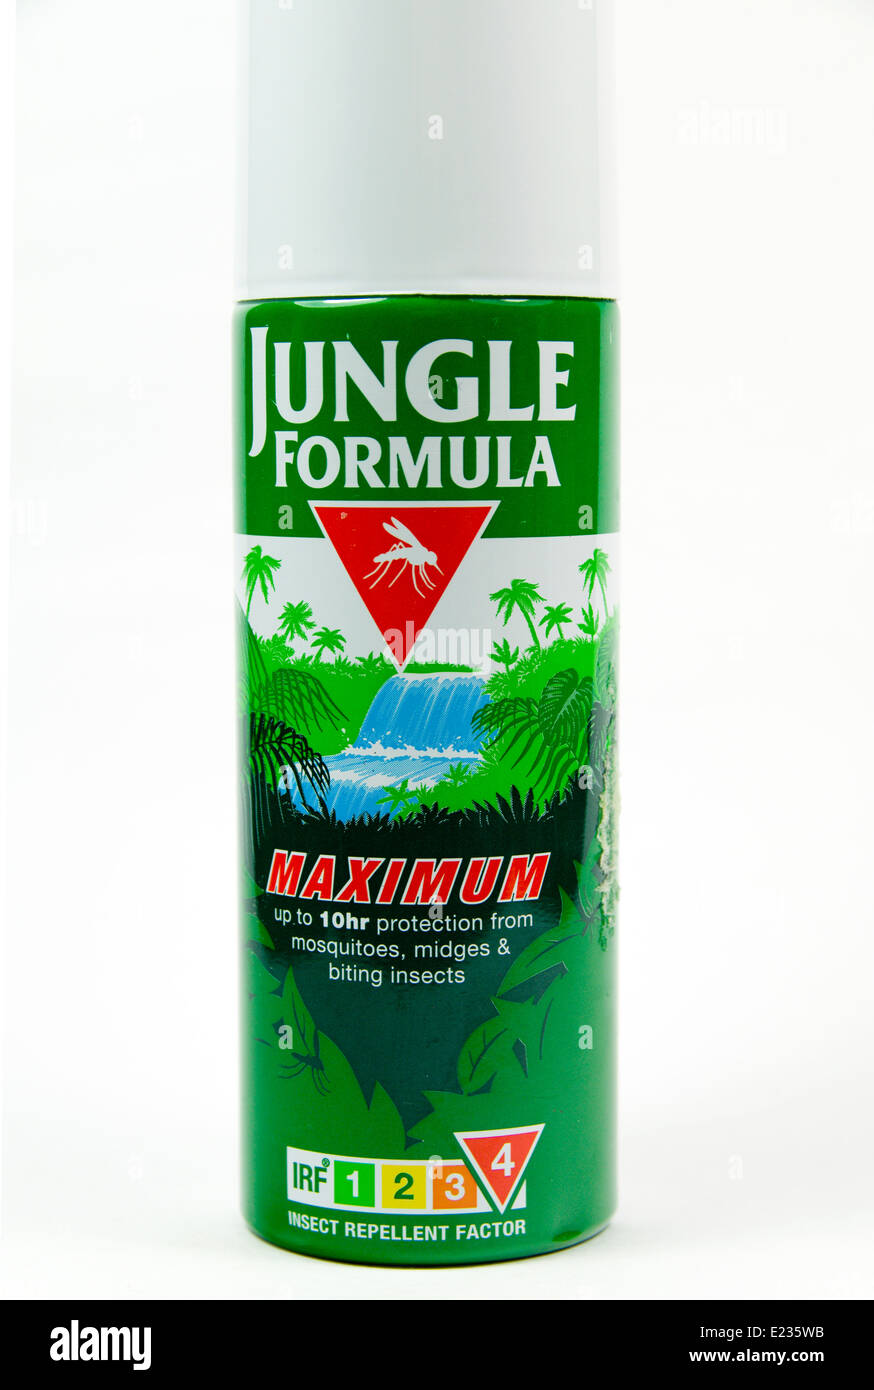 Jungle Formula insect repellent Stock Photo